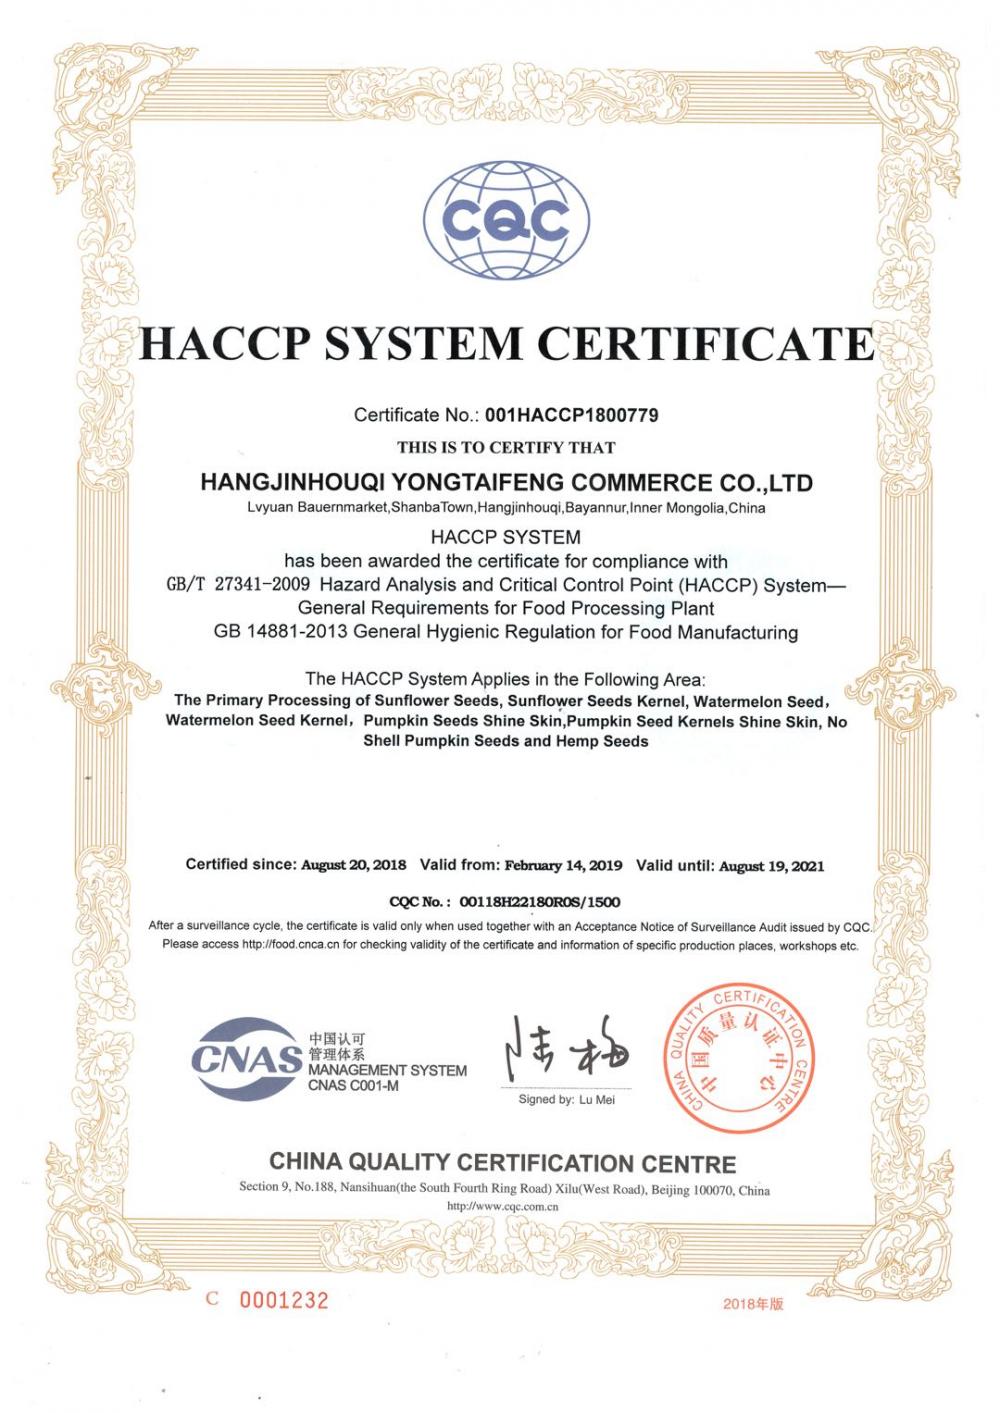 HACCP CERTIFICATE 